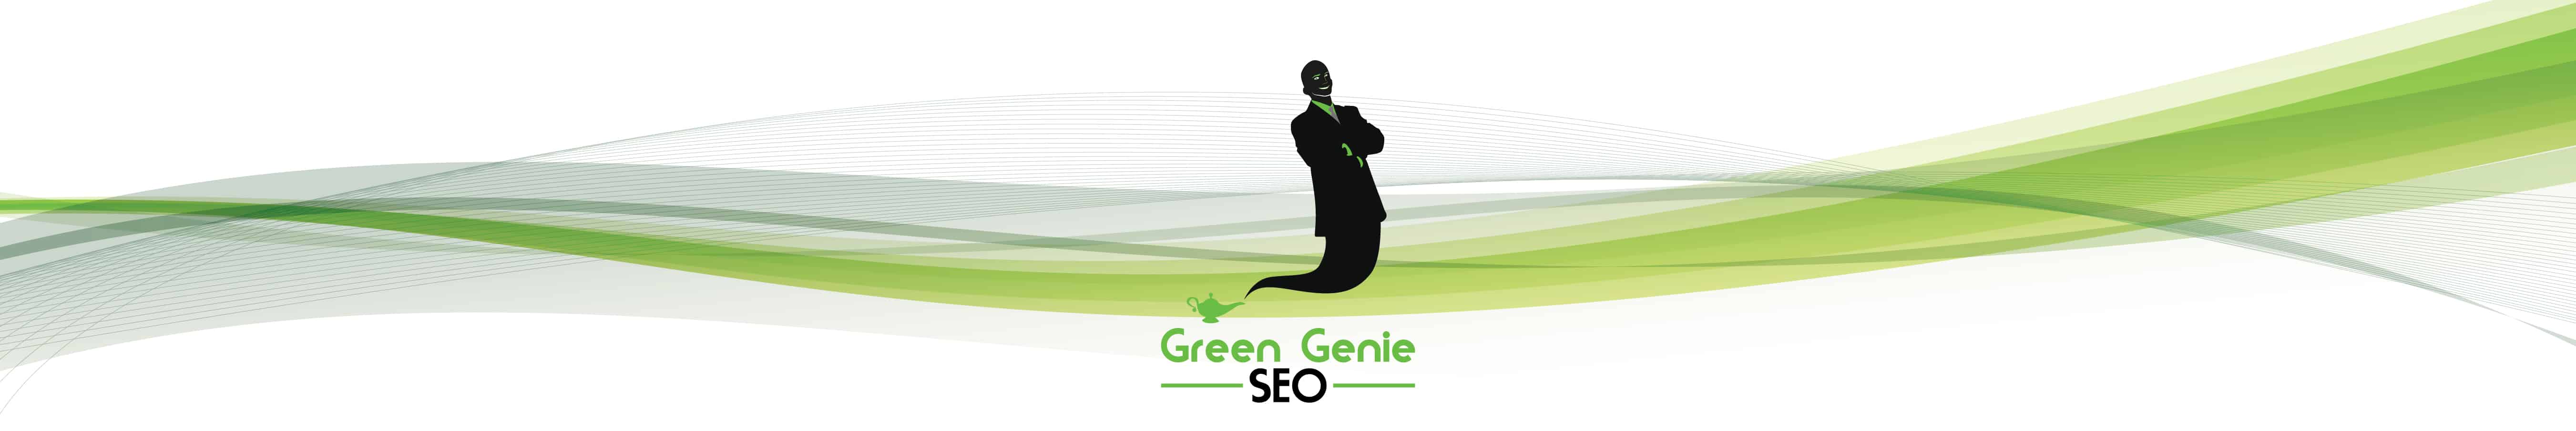 Green Genie Search Engine Marketing